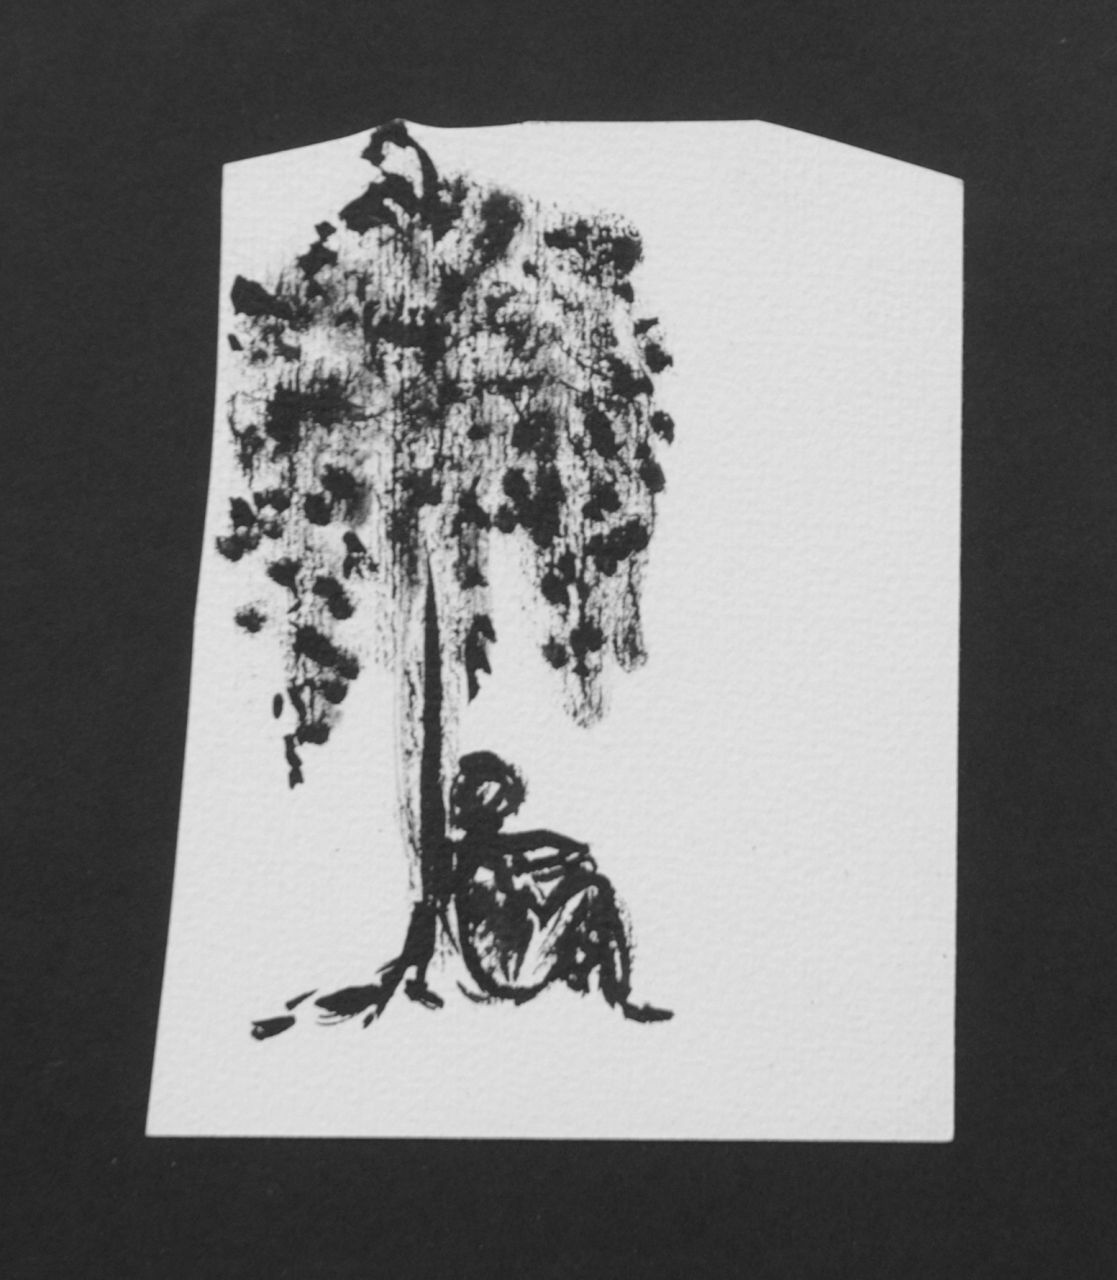 Oranje-Nassau (Prinses Beatrix) B.W.A. van | Beatrix Wilhelmina Armgard van Oranje-Nassau (Prinses Beatrix), Man sleepig under a tree, pencil and black ink on paper 12.2 x 9.7 cm, executed August 1960